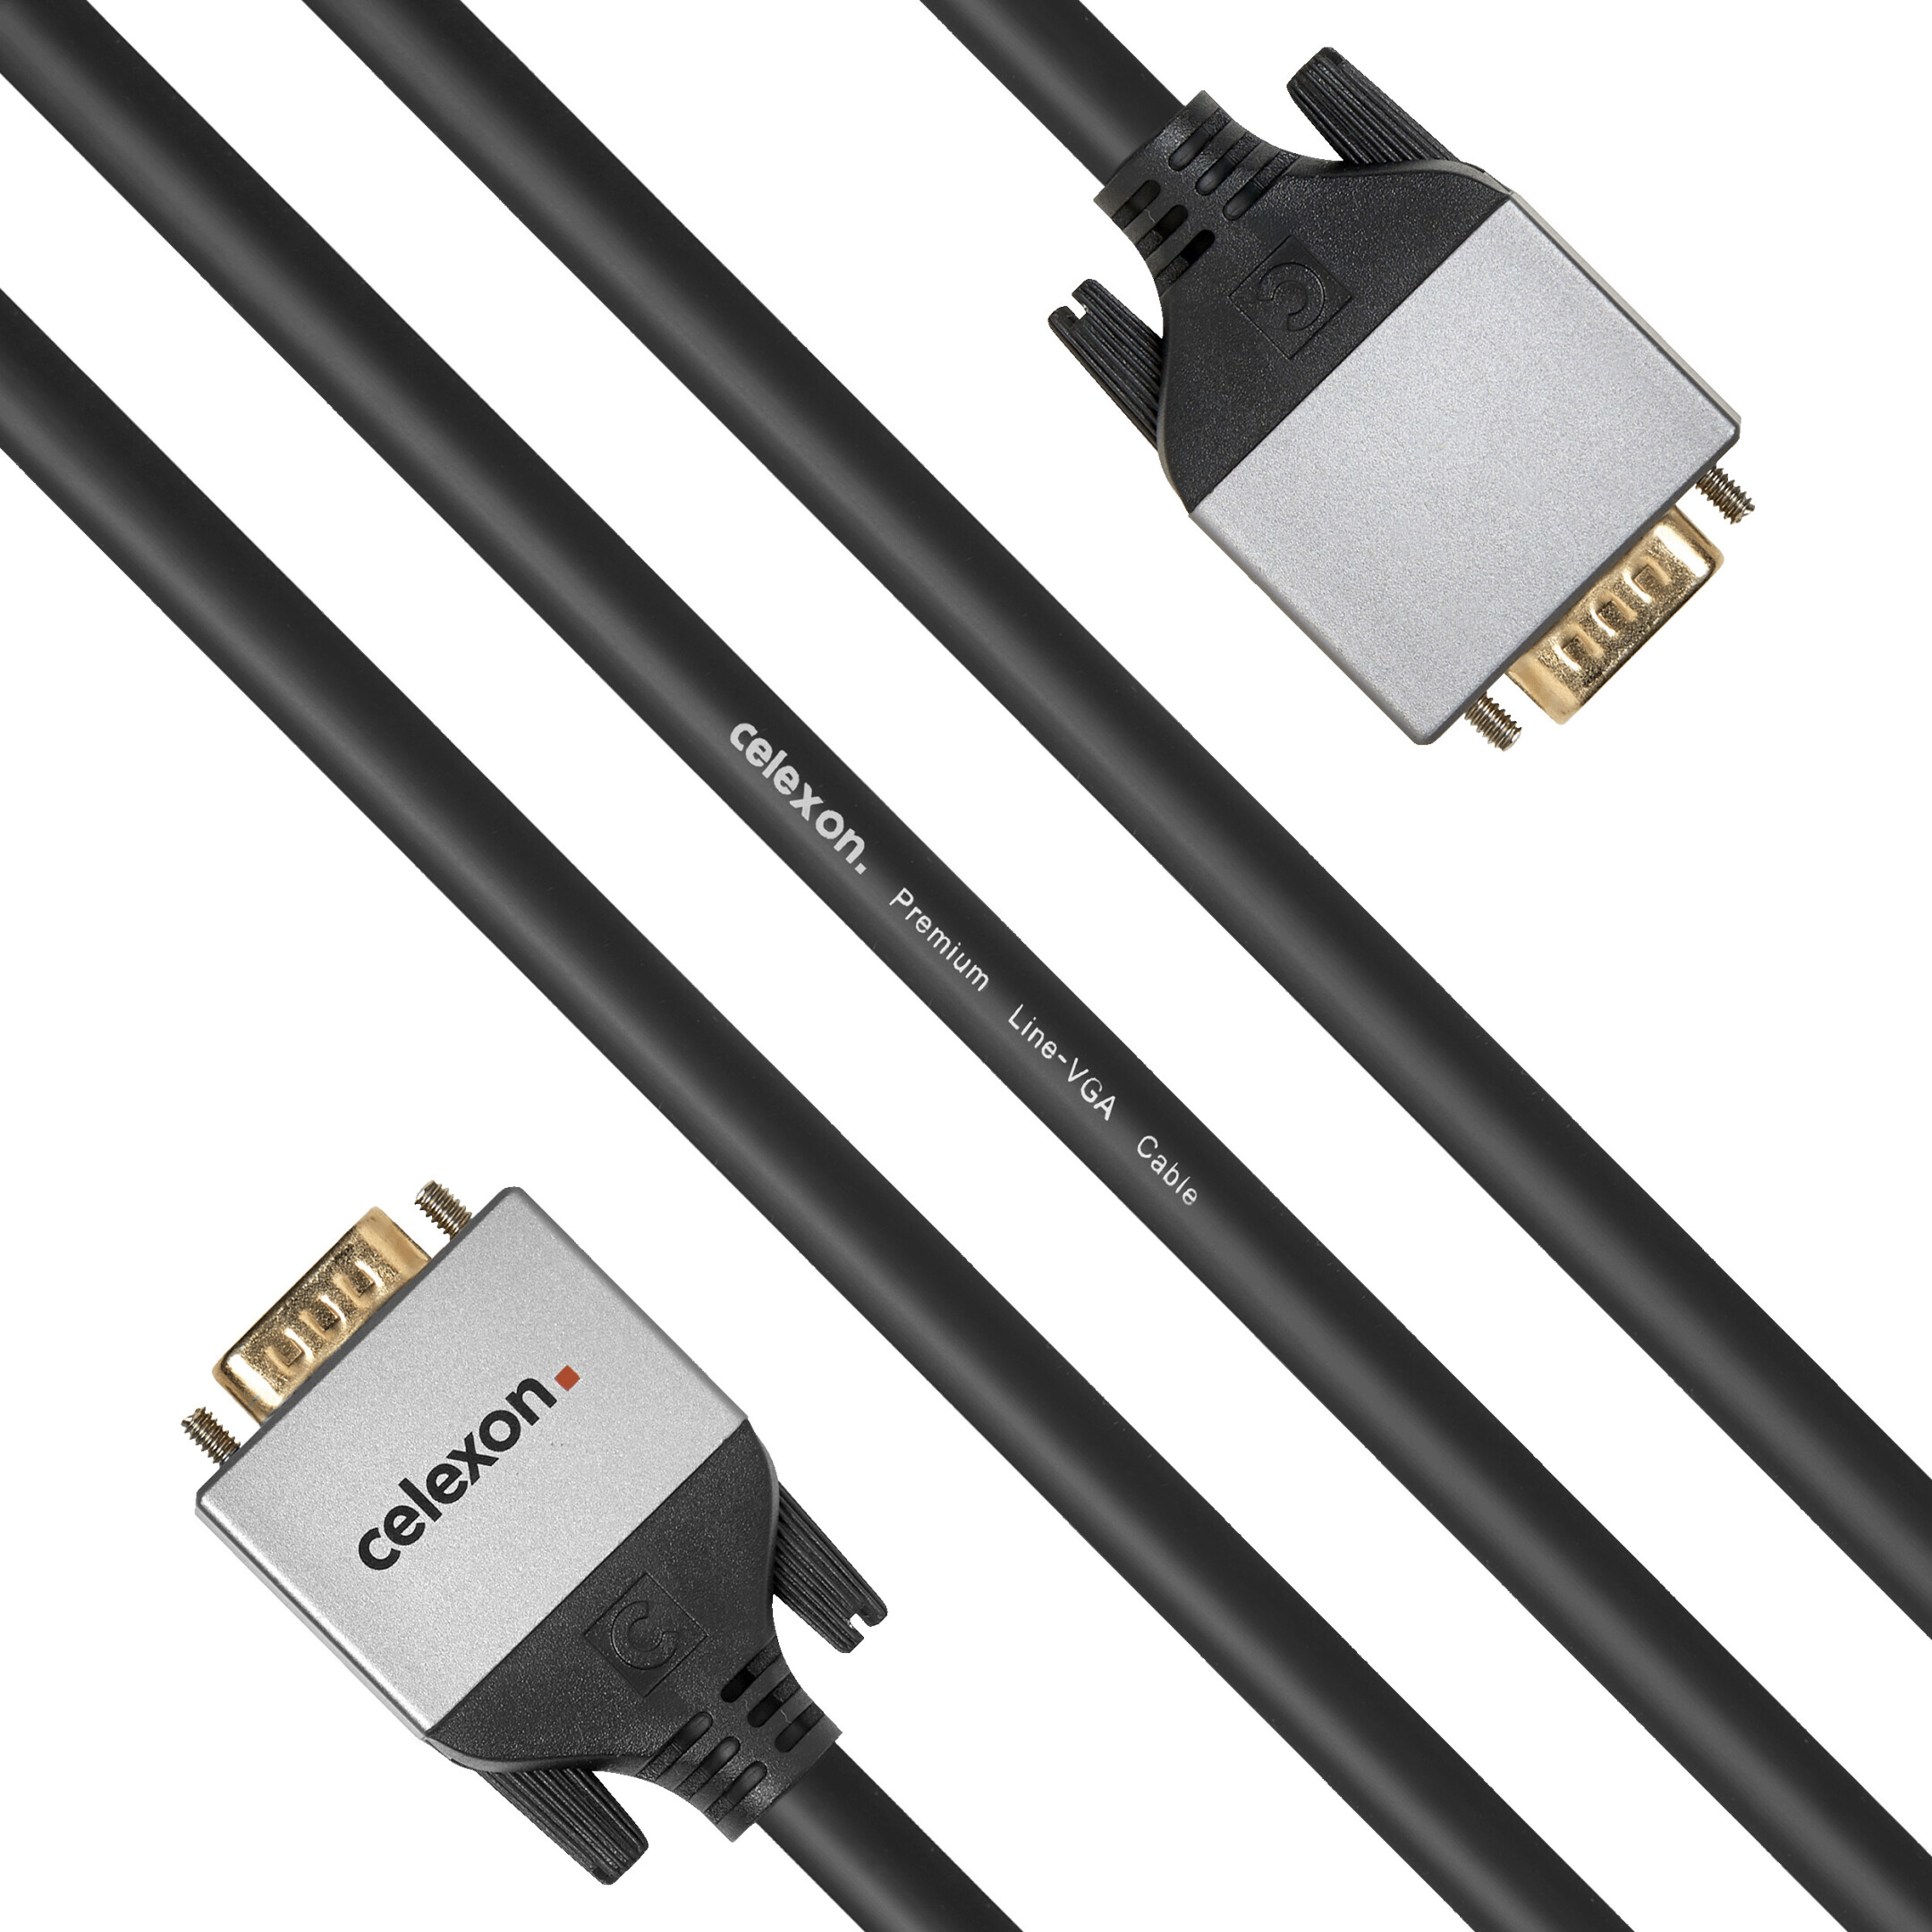 celexon-VGA-Kabel-2-0m-Professional-Line